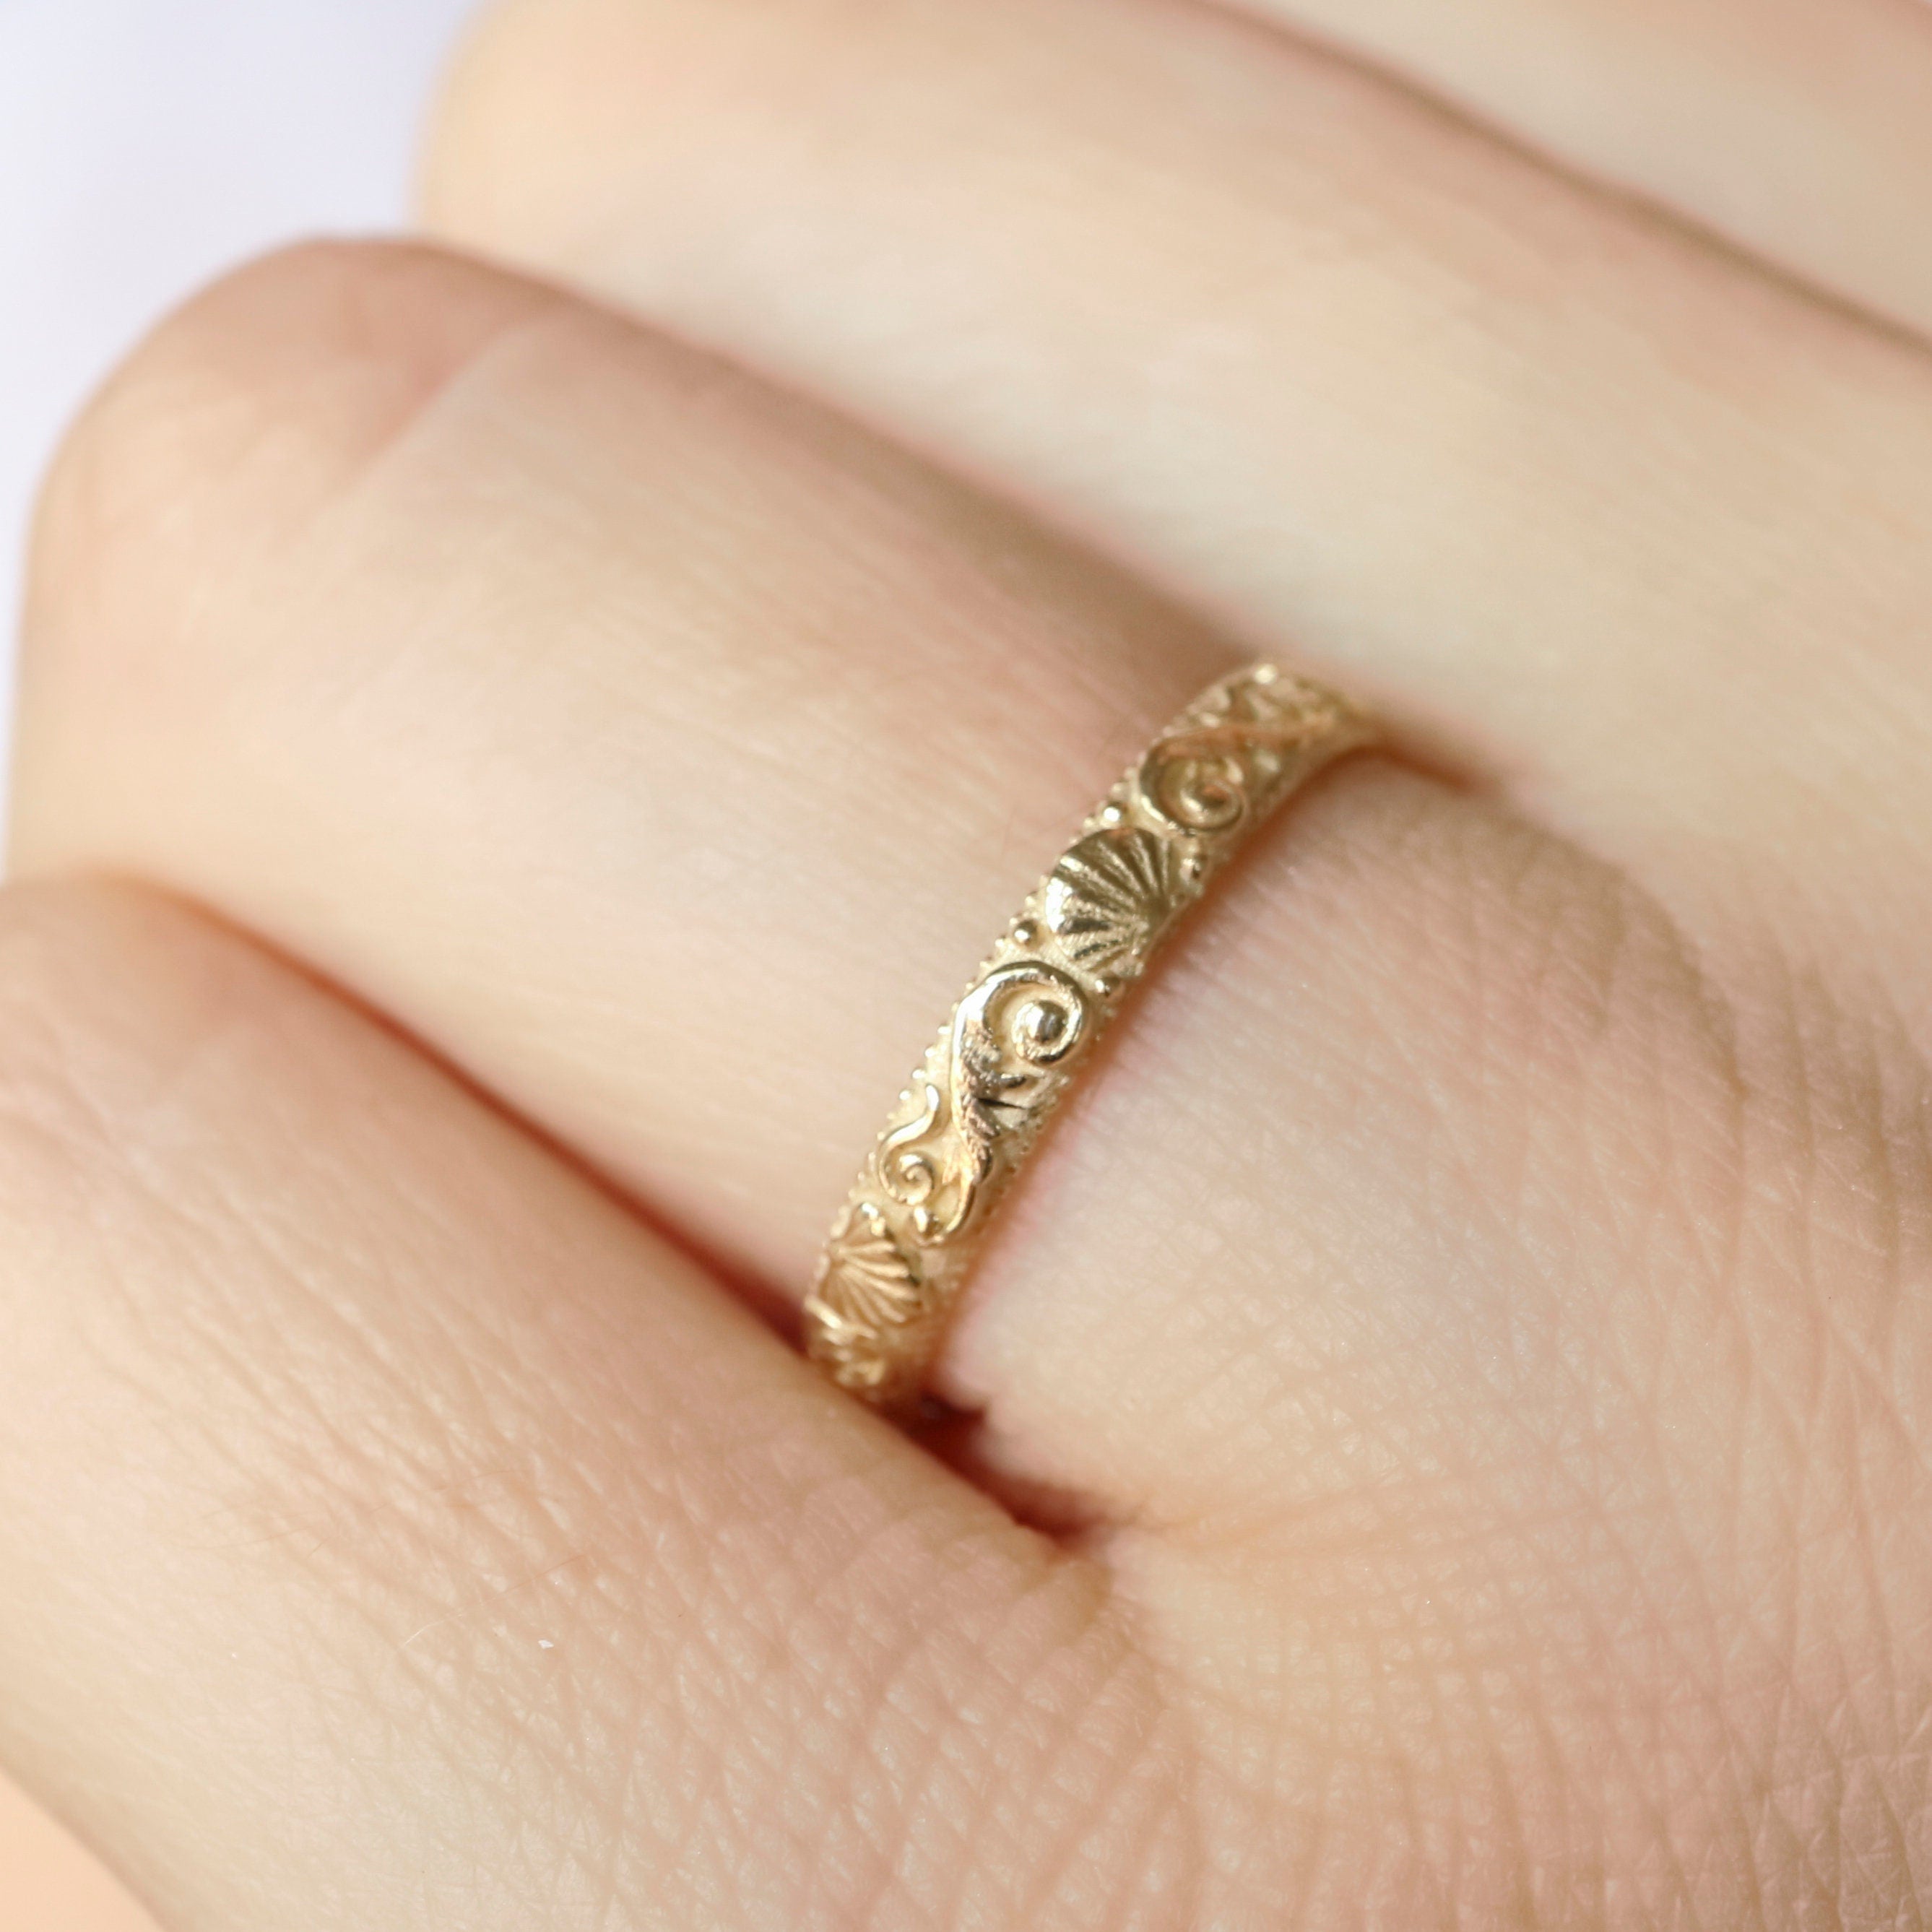 Ocean inspired engagement ring – distinctively